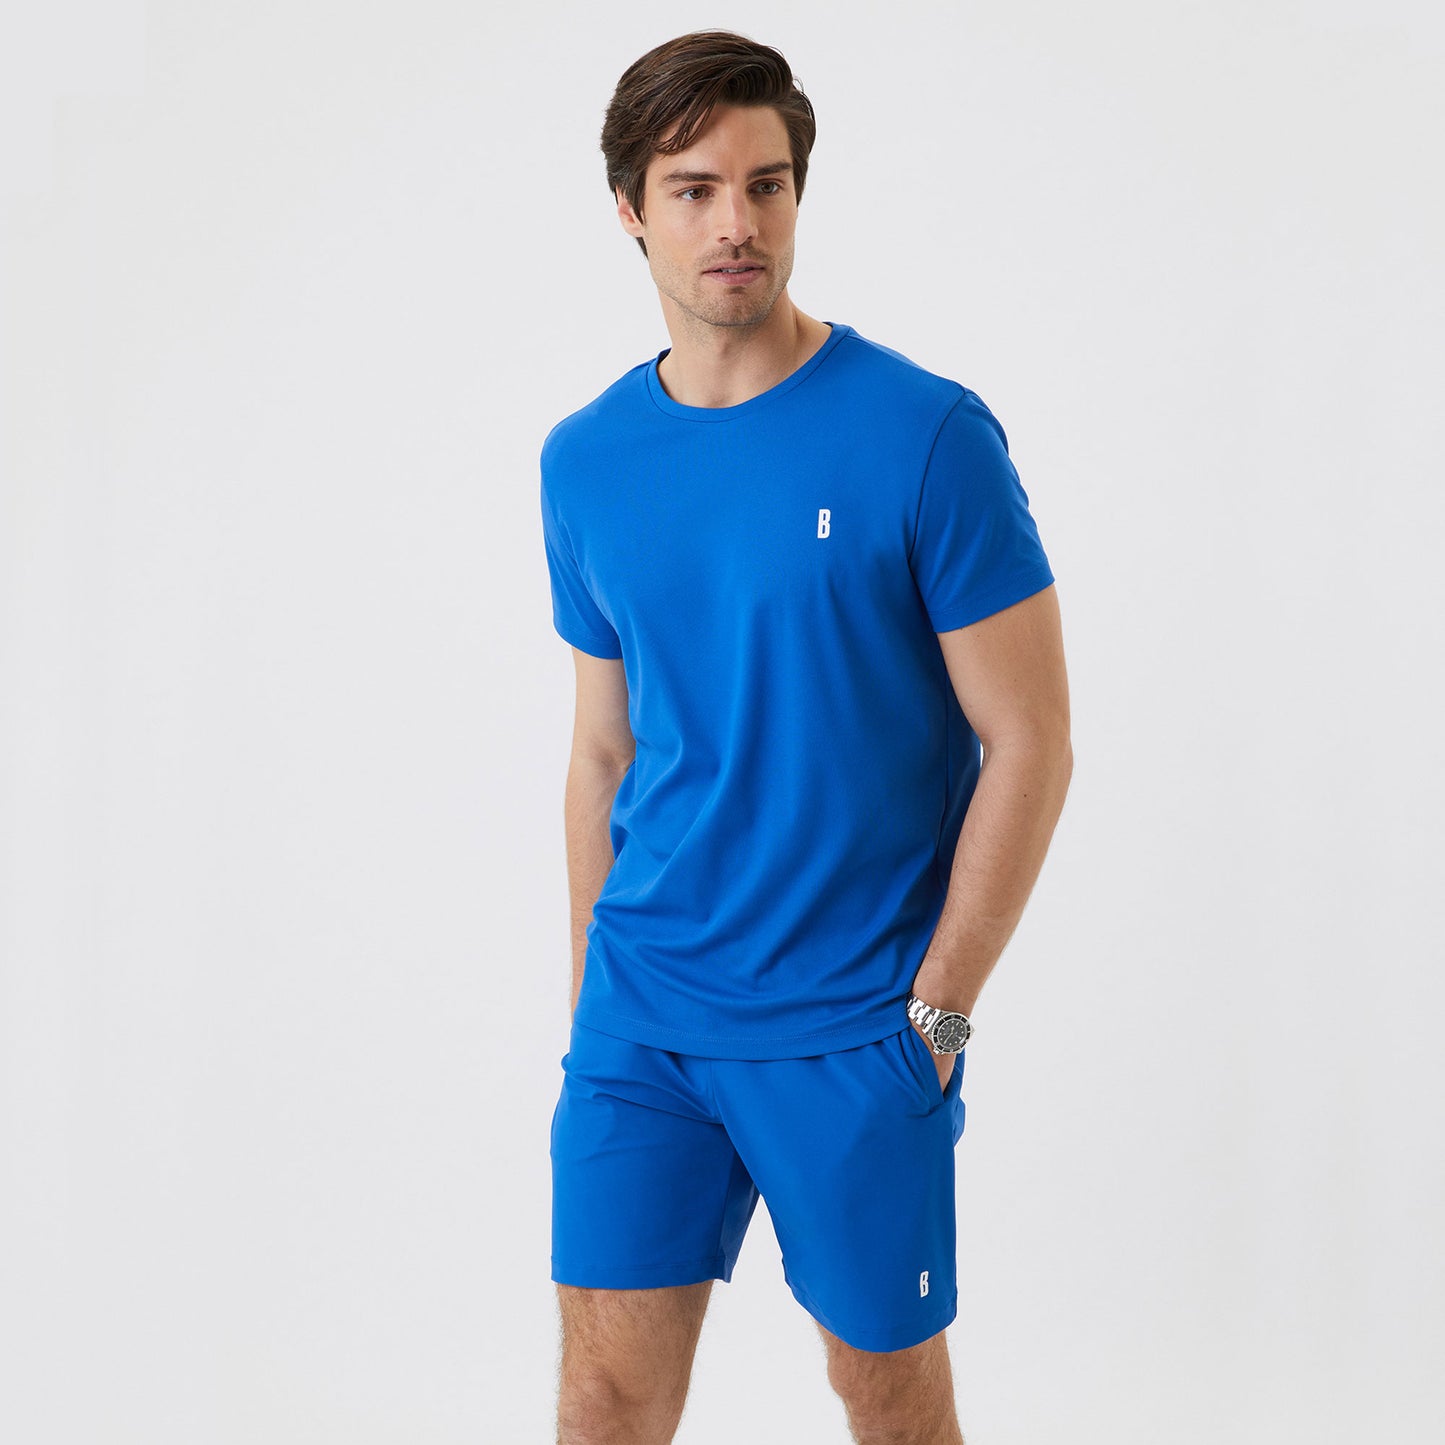 Björn Borg Ace Men's Tennis Shirt Blue (1)